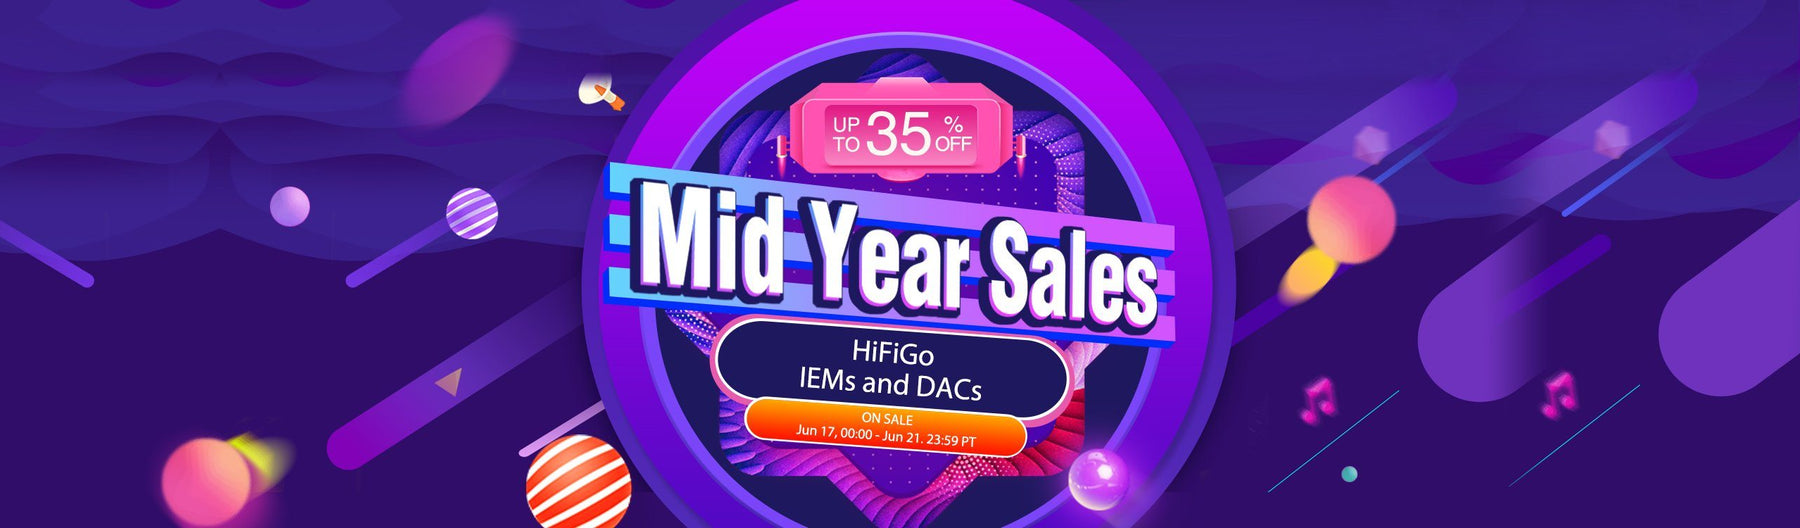 6.18 HiFiGo Mid year sale !!